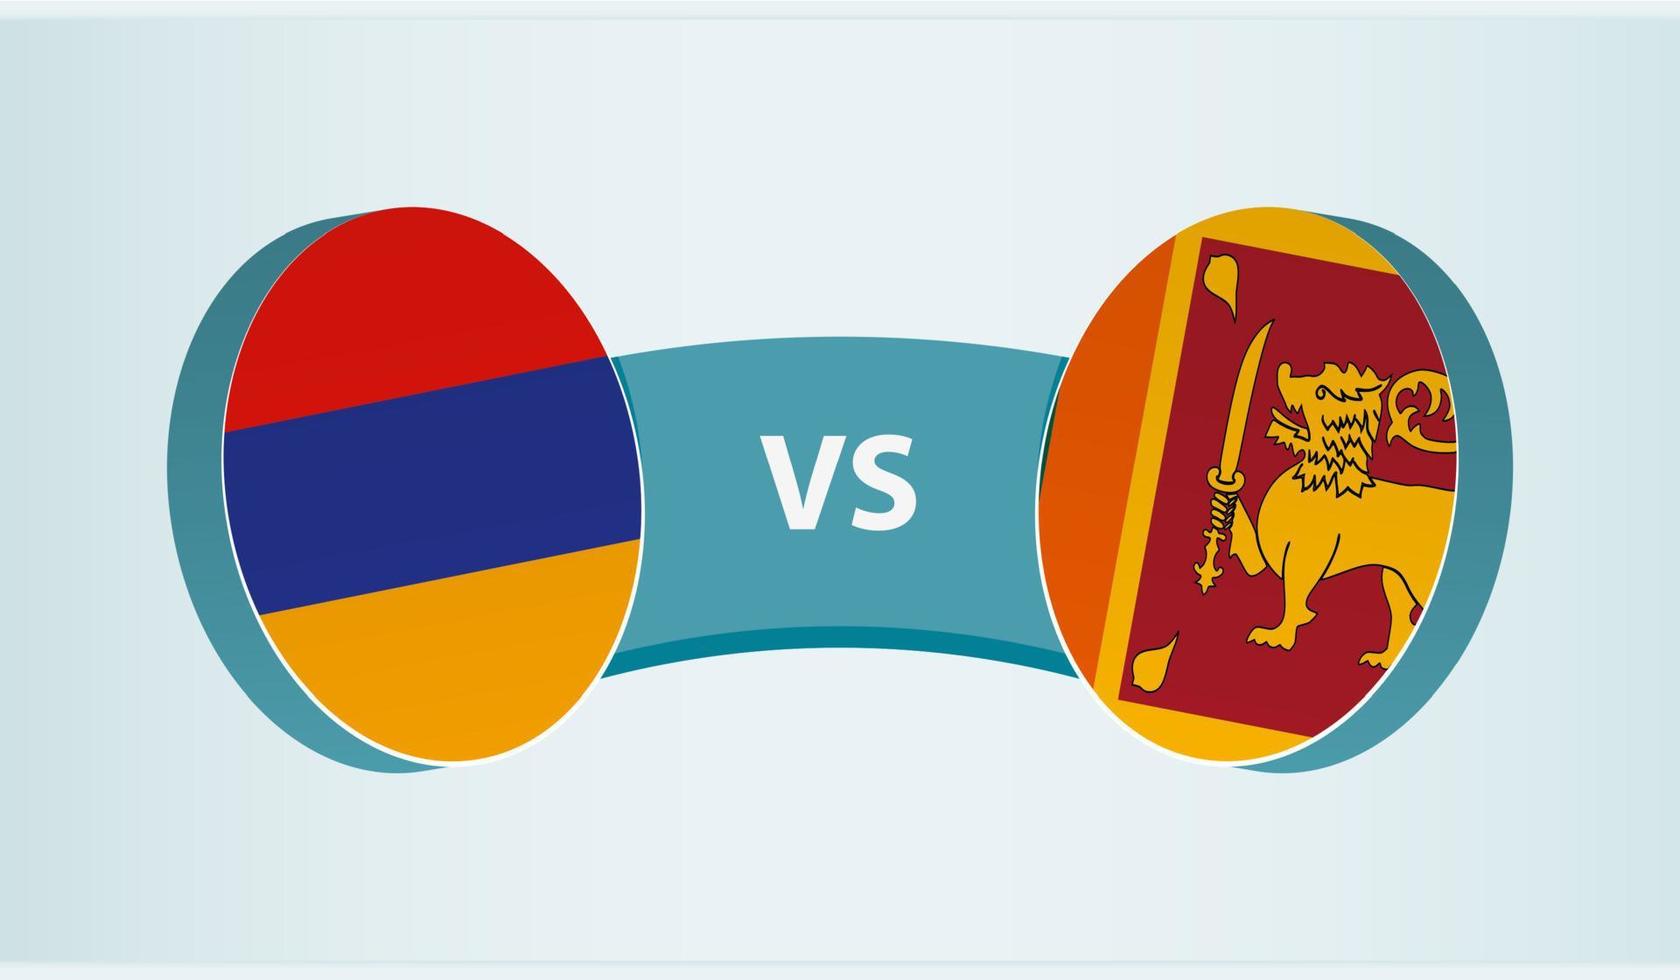 Armenia versus Sri Lanka, team sports competition concept. vector